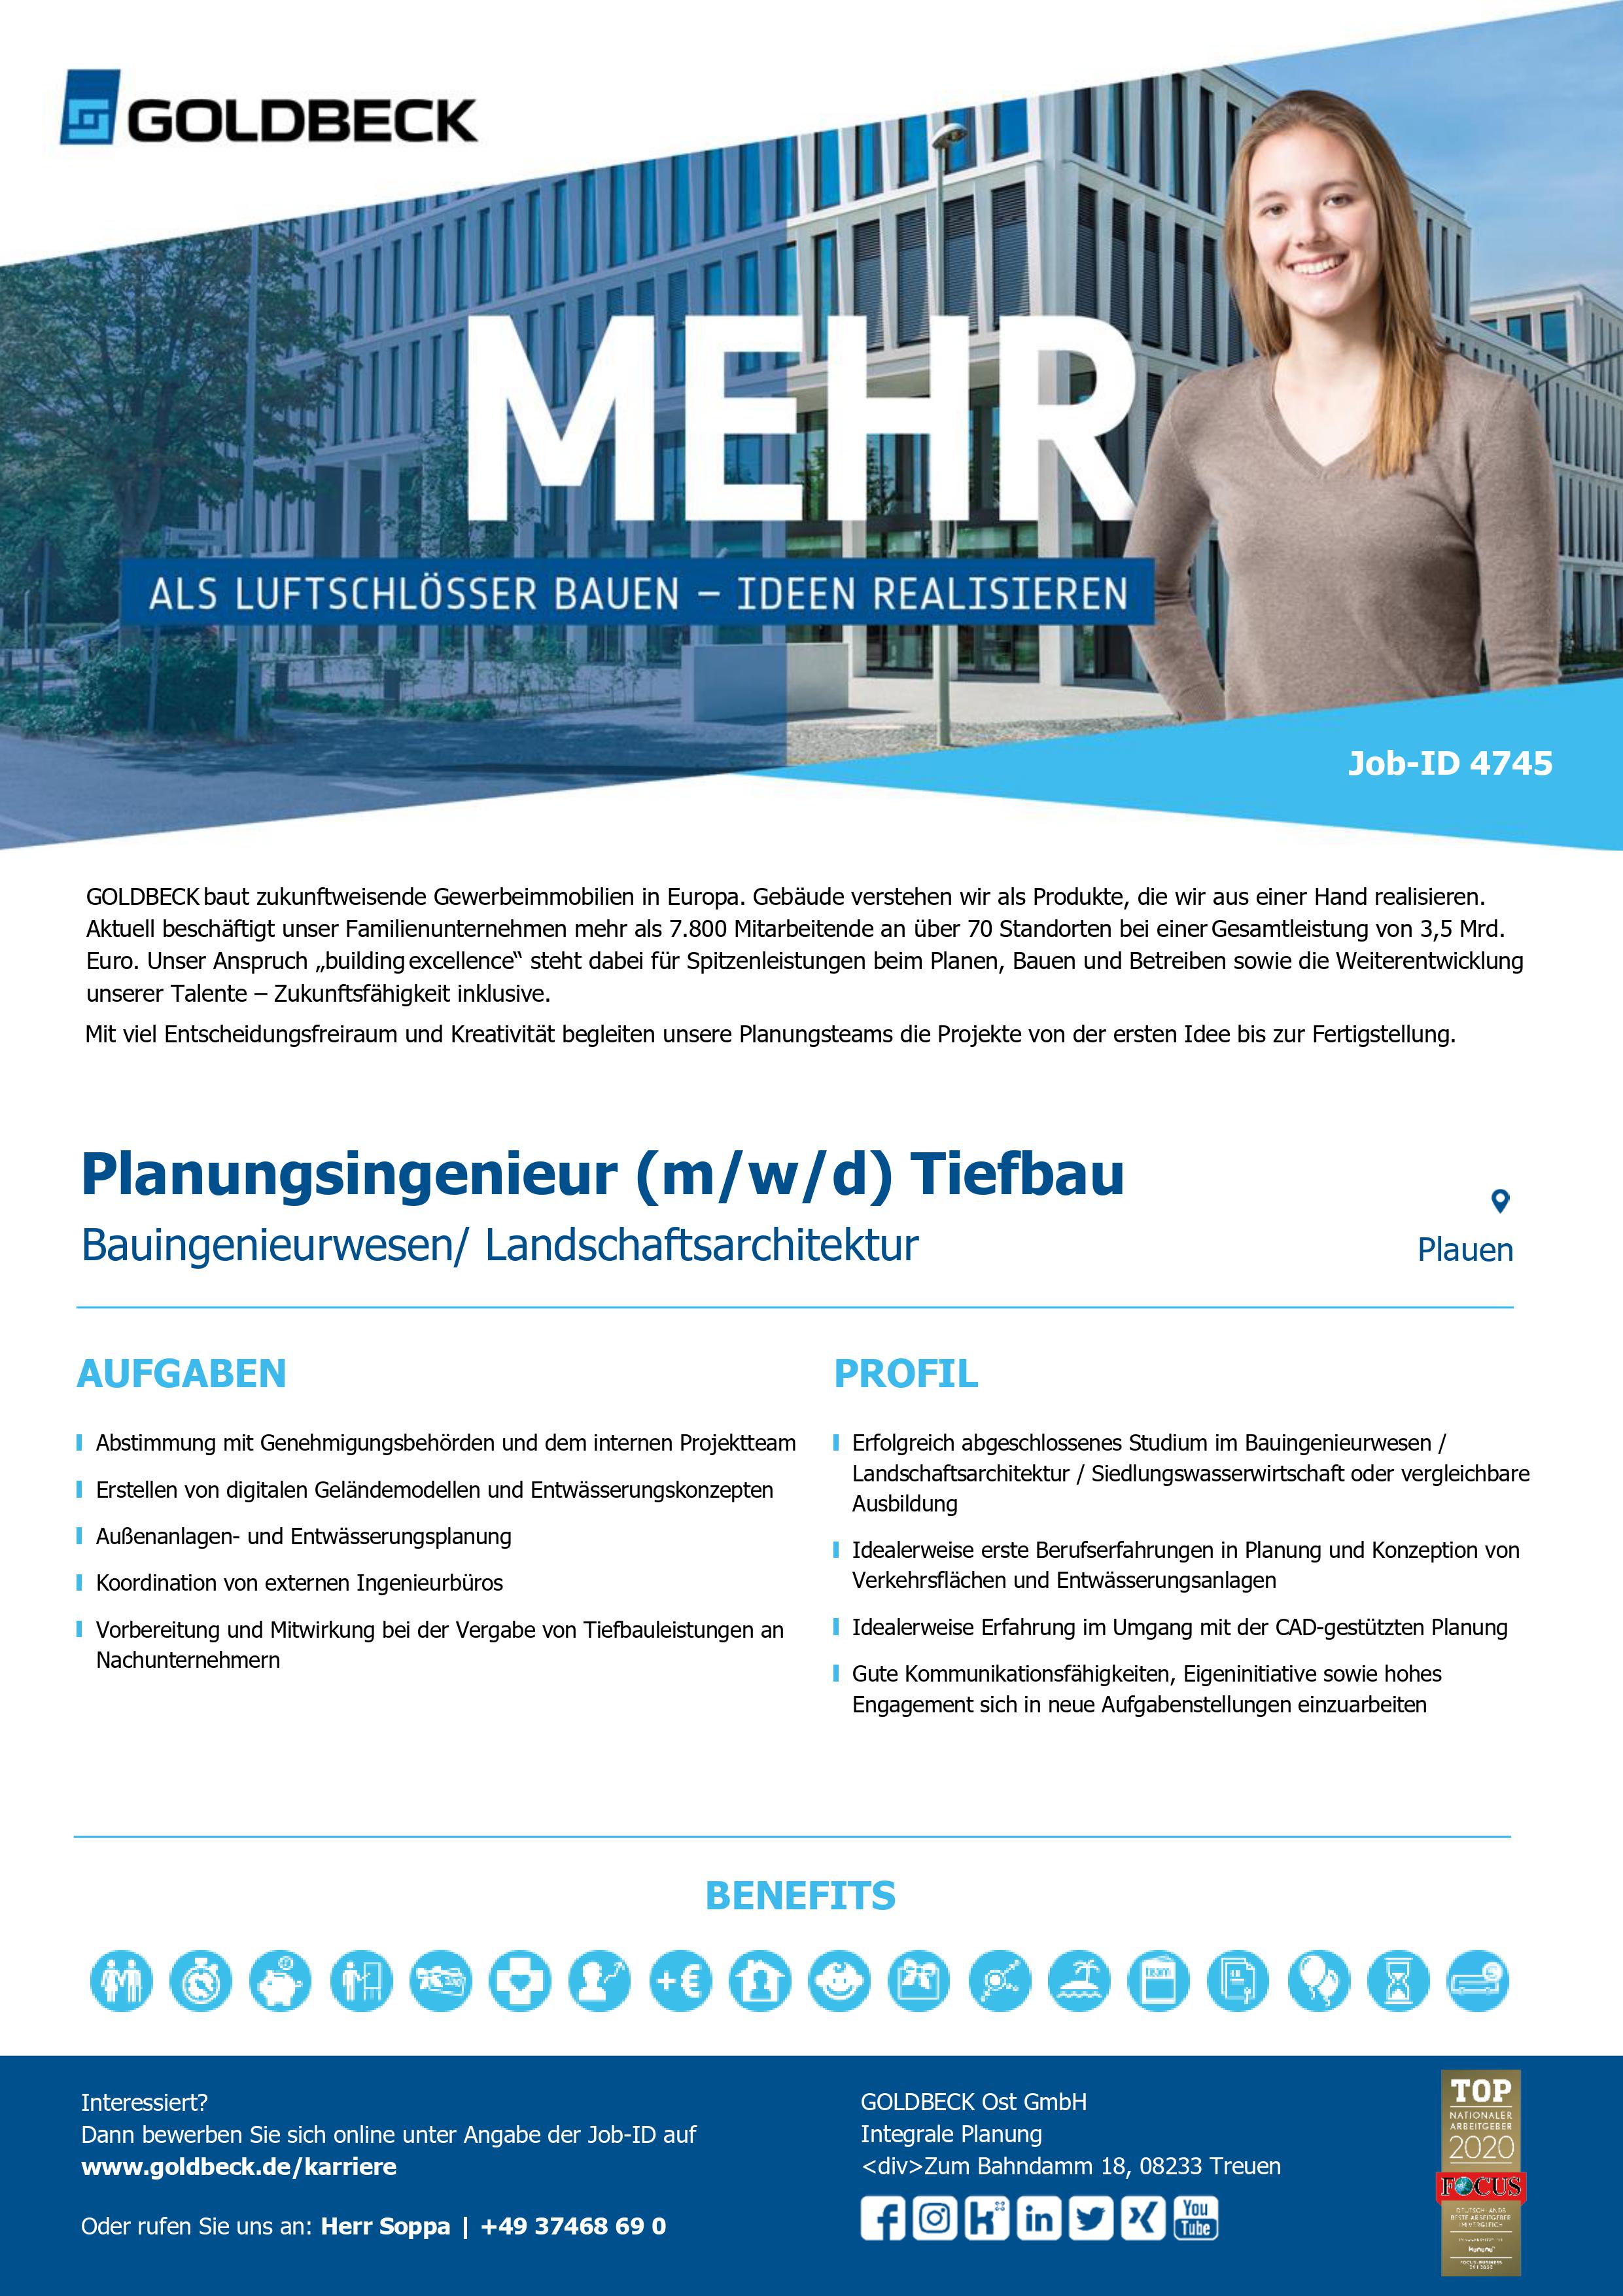 Planungsingenieur (m/w/d) Tiefbau - Goldbeck